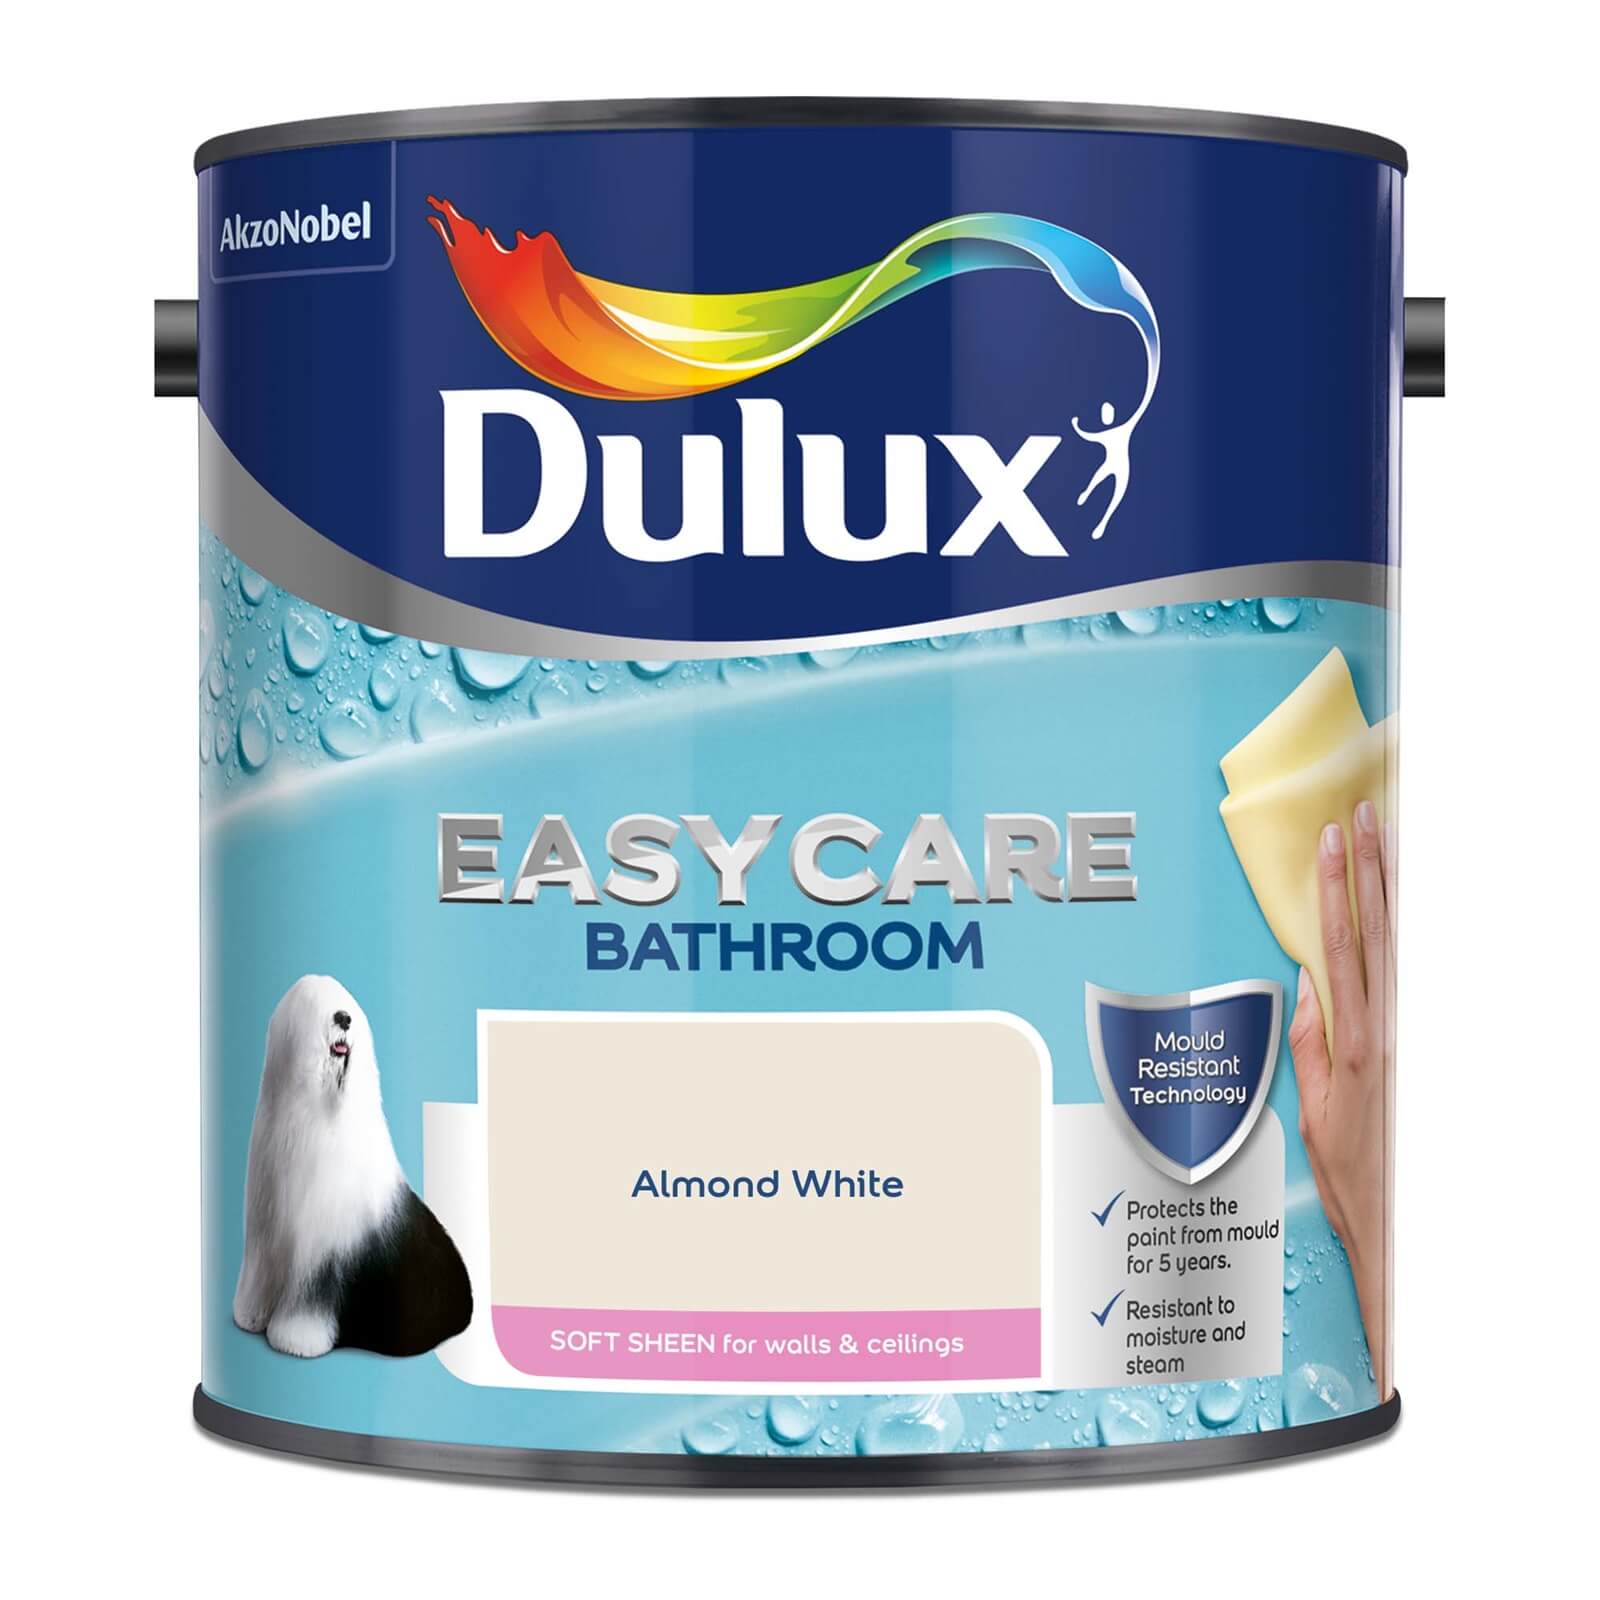 Dulux Easycare Bathroom Almond White Soft Sheen Paint - 2.5L